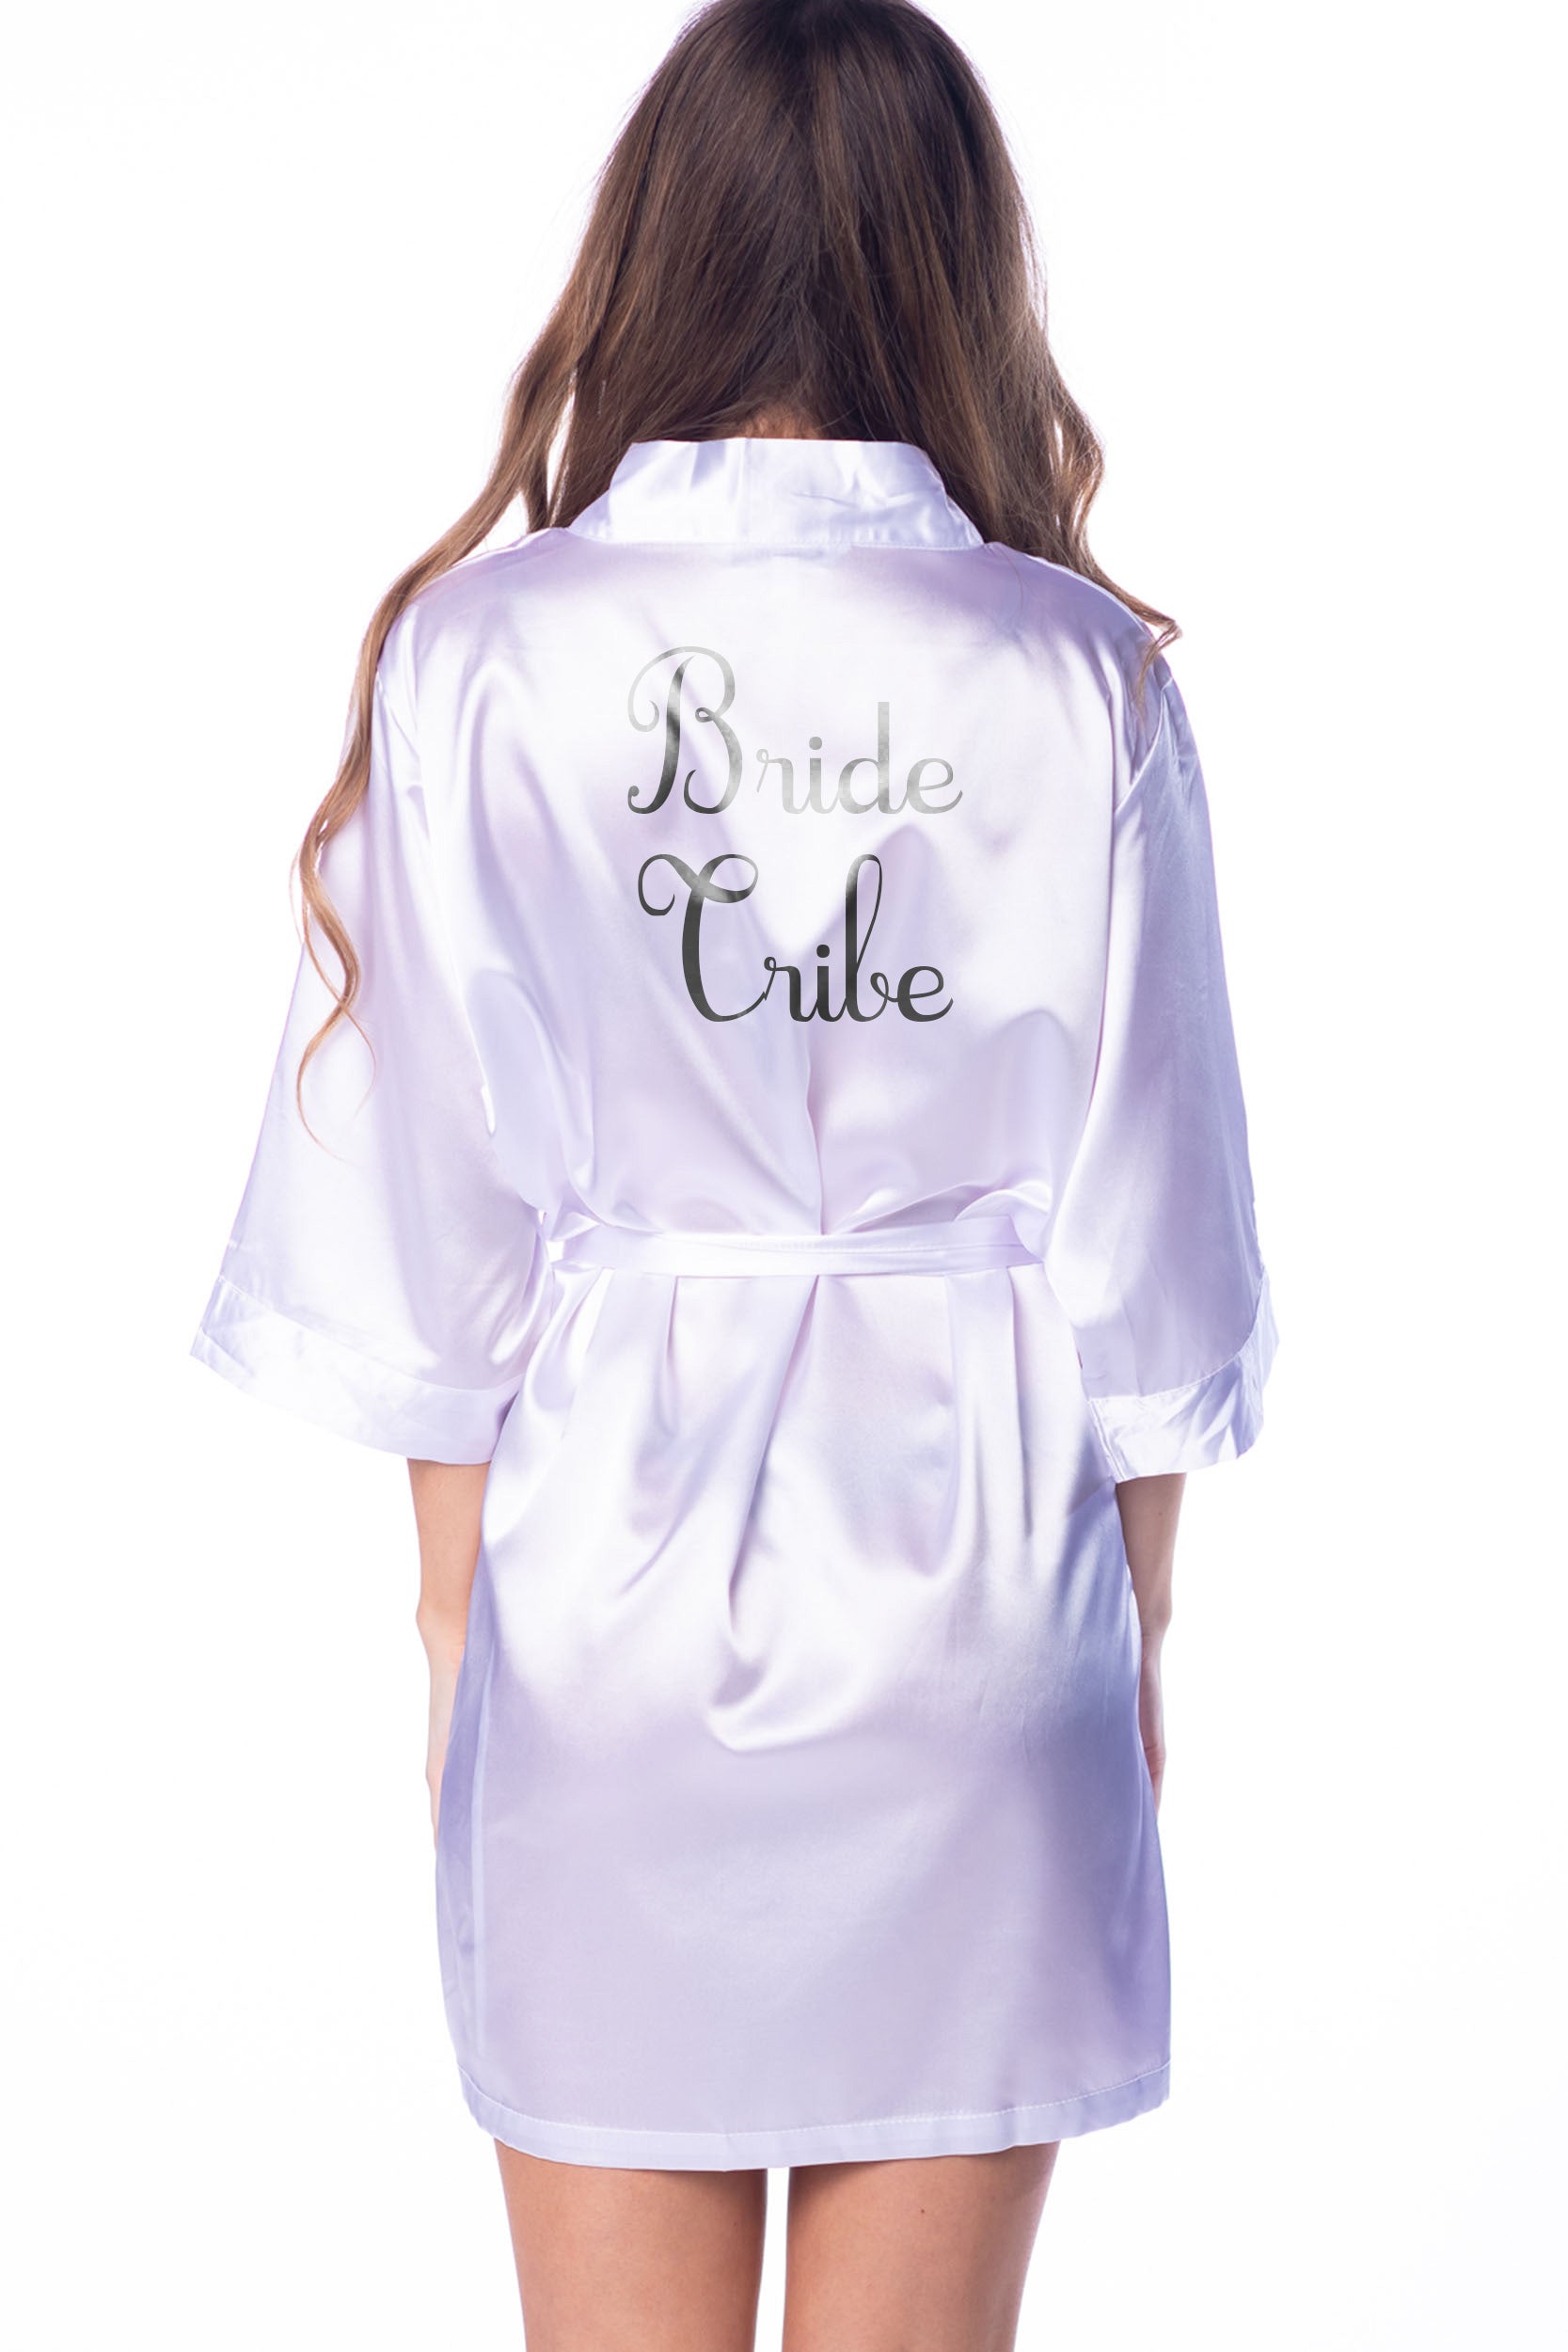 S/M Bride Tribe Lavender Satin Robe - Cursif in Metal Silver –  PrettyRobes.com